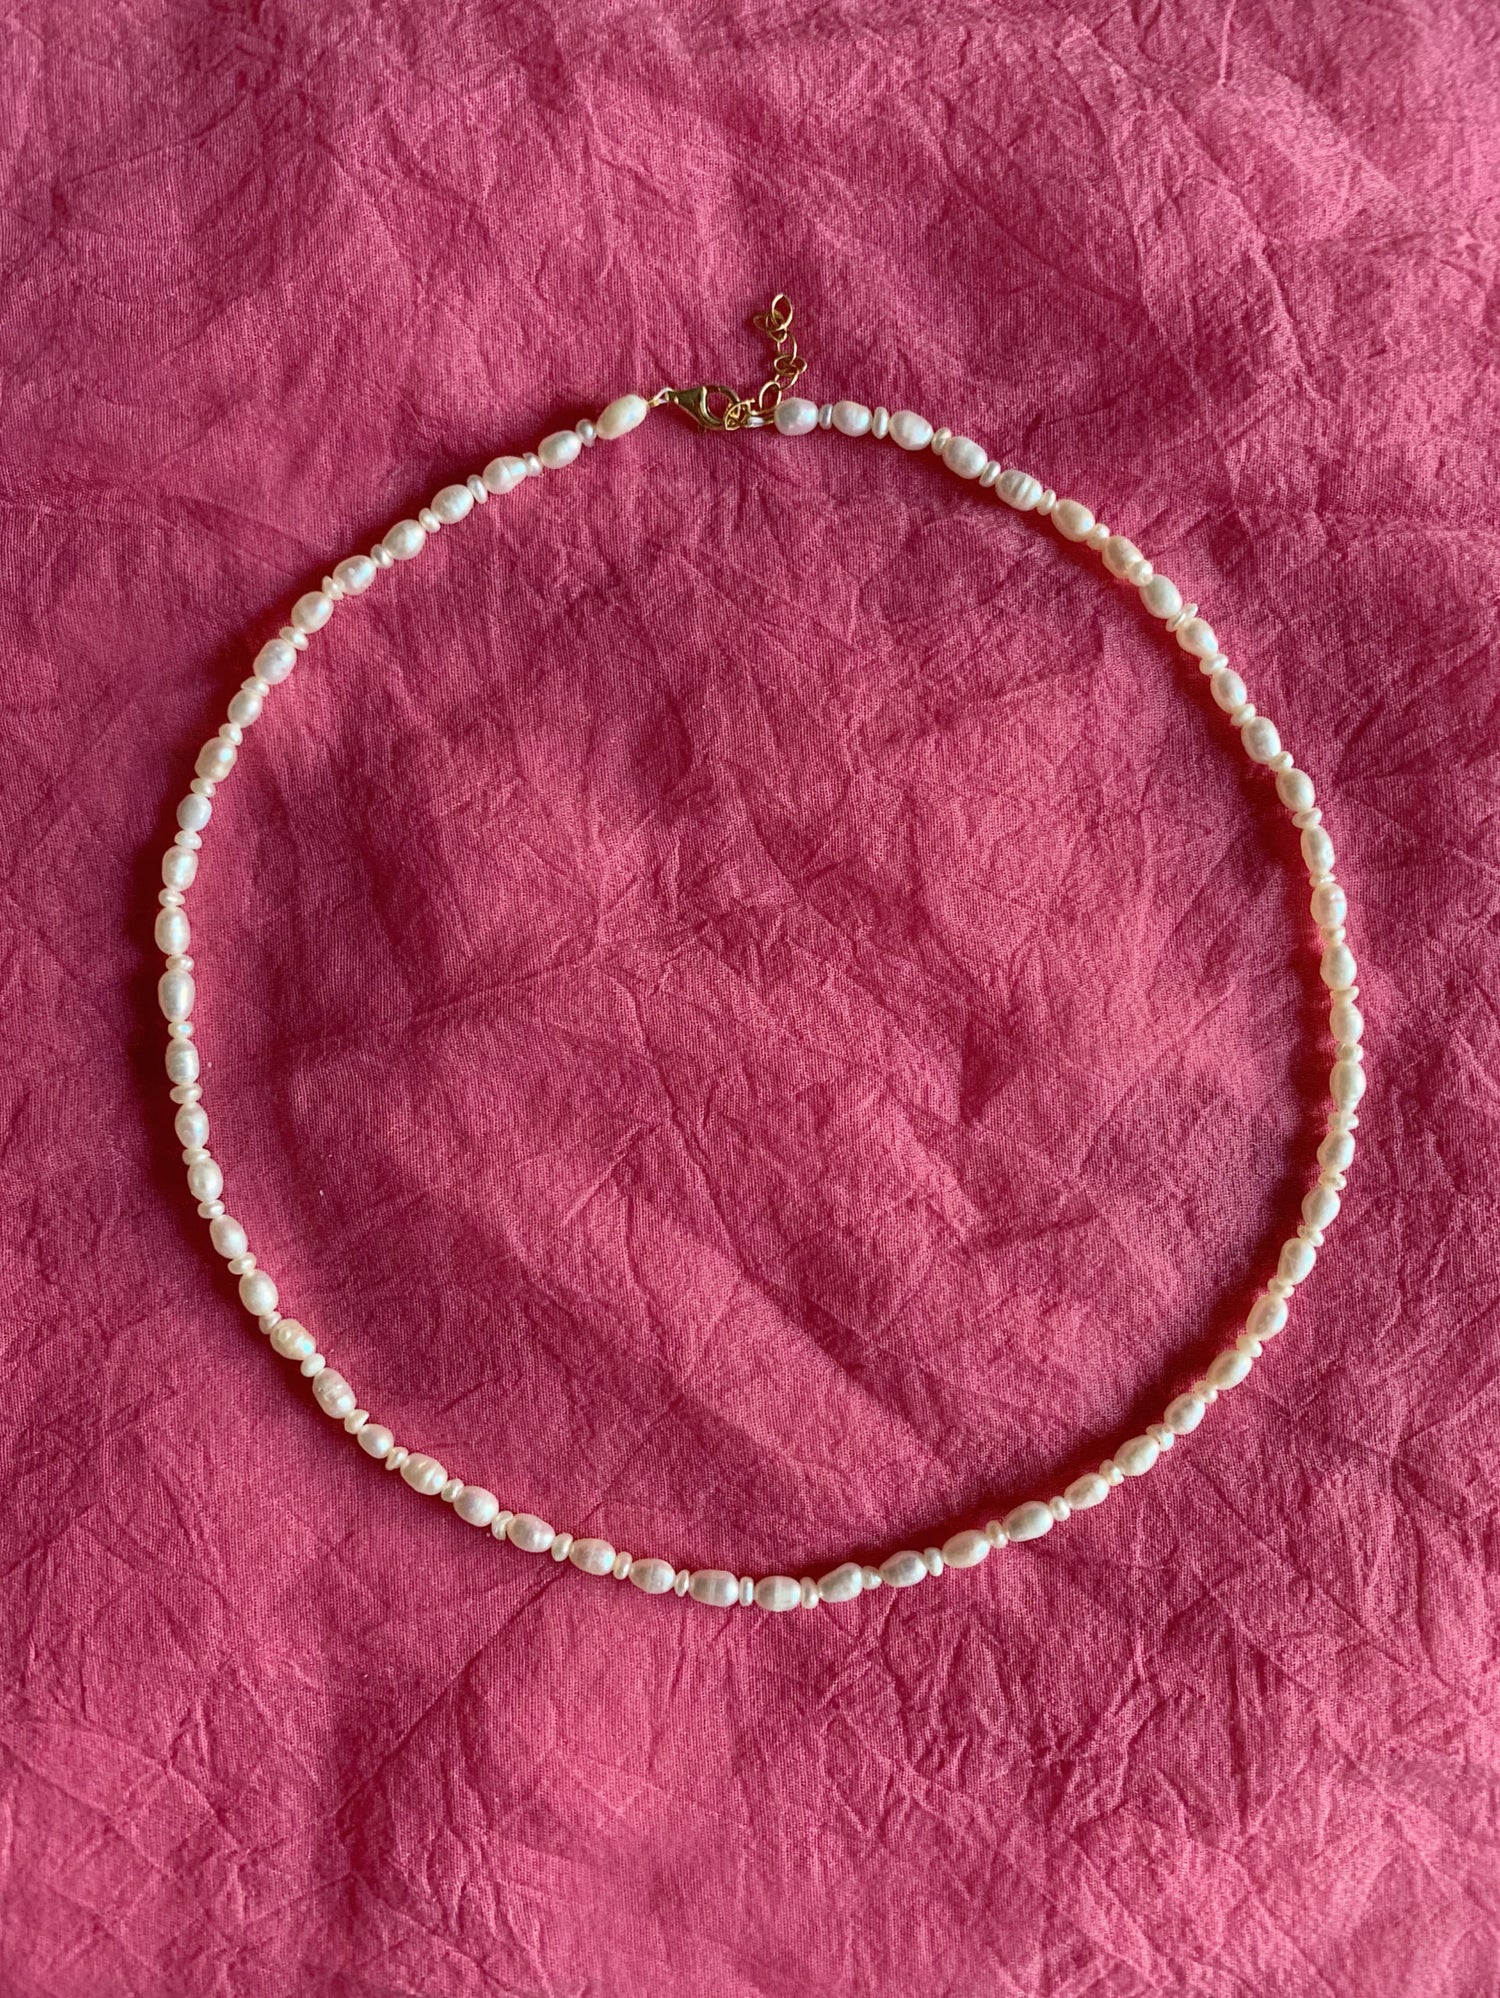 NAKU Jewellery Powder Pearls Necklace White